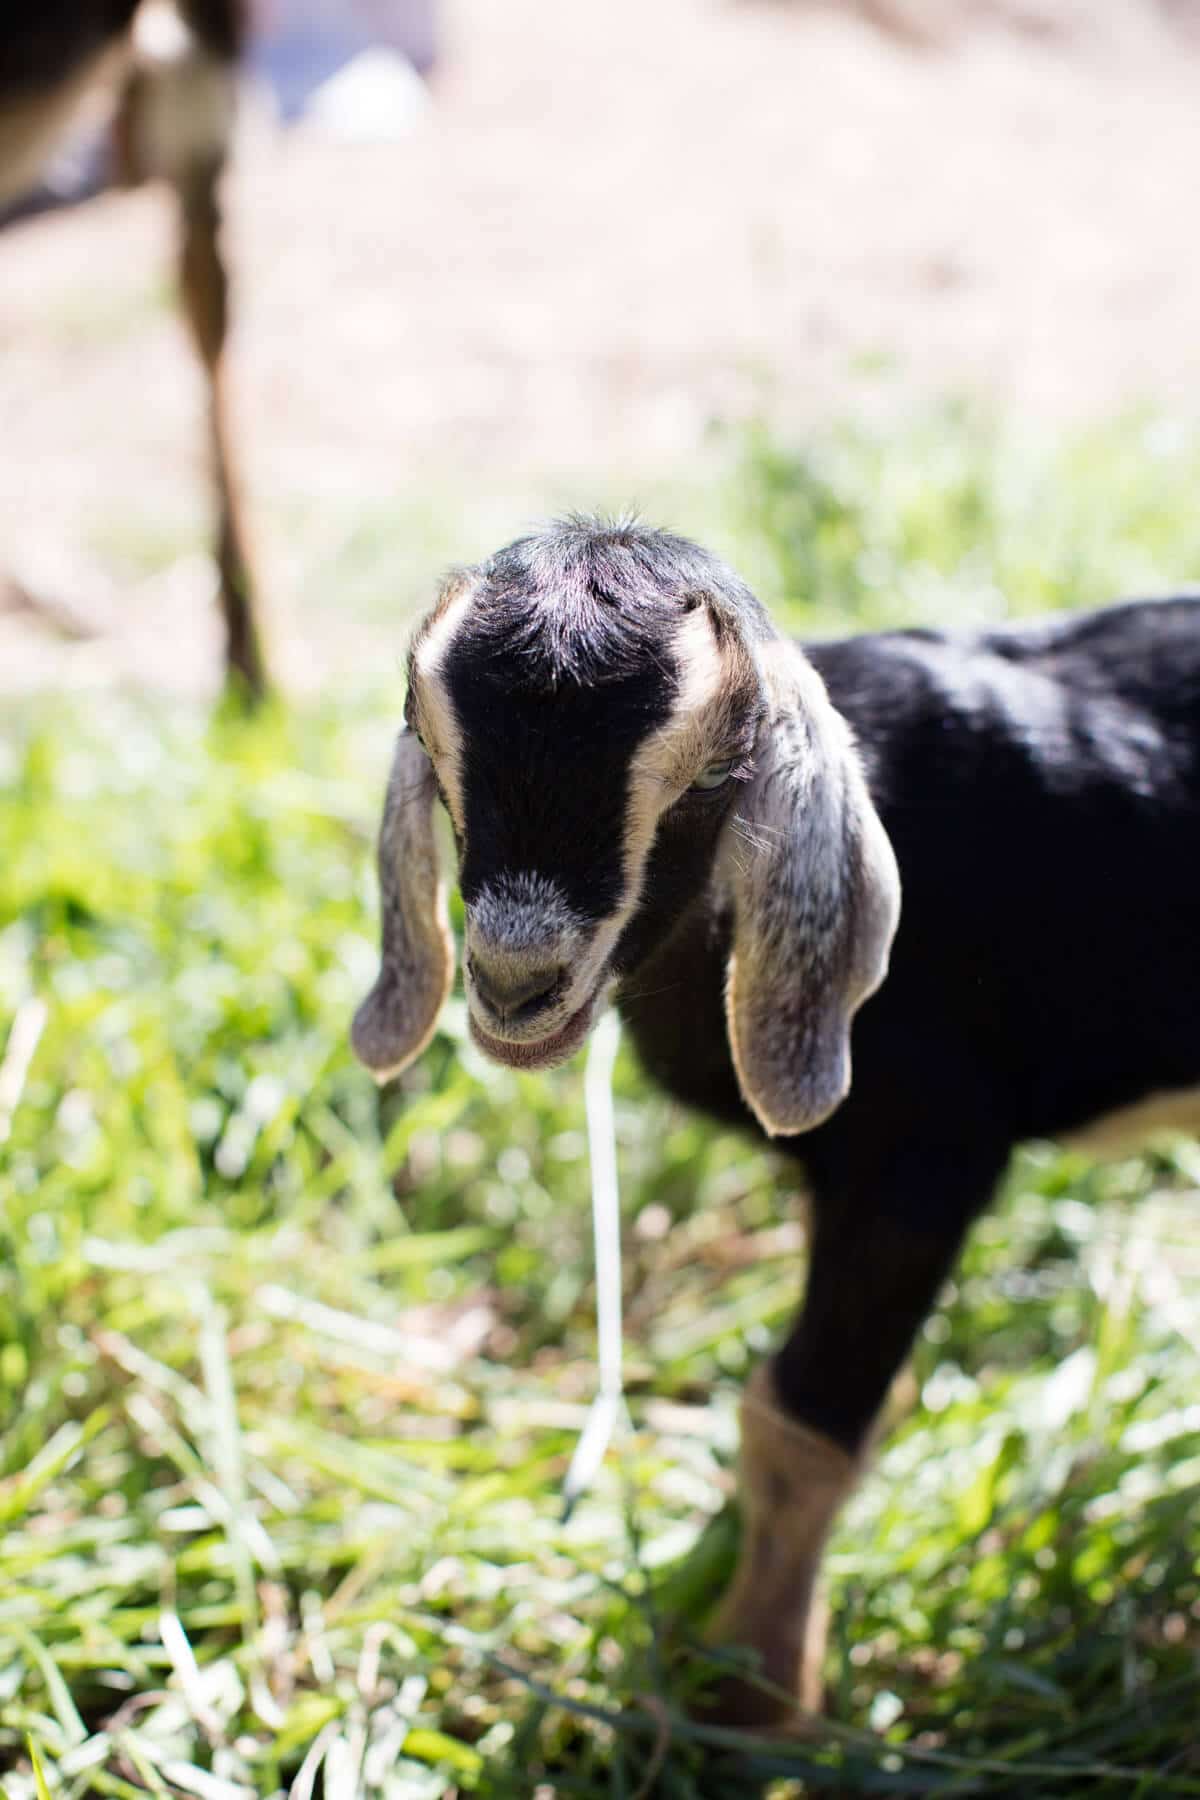 Baby Goat Photos + All Things Fall | halfbakedharvest.com @hbharvest